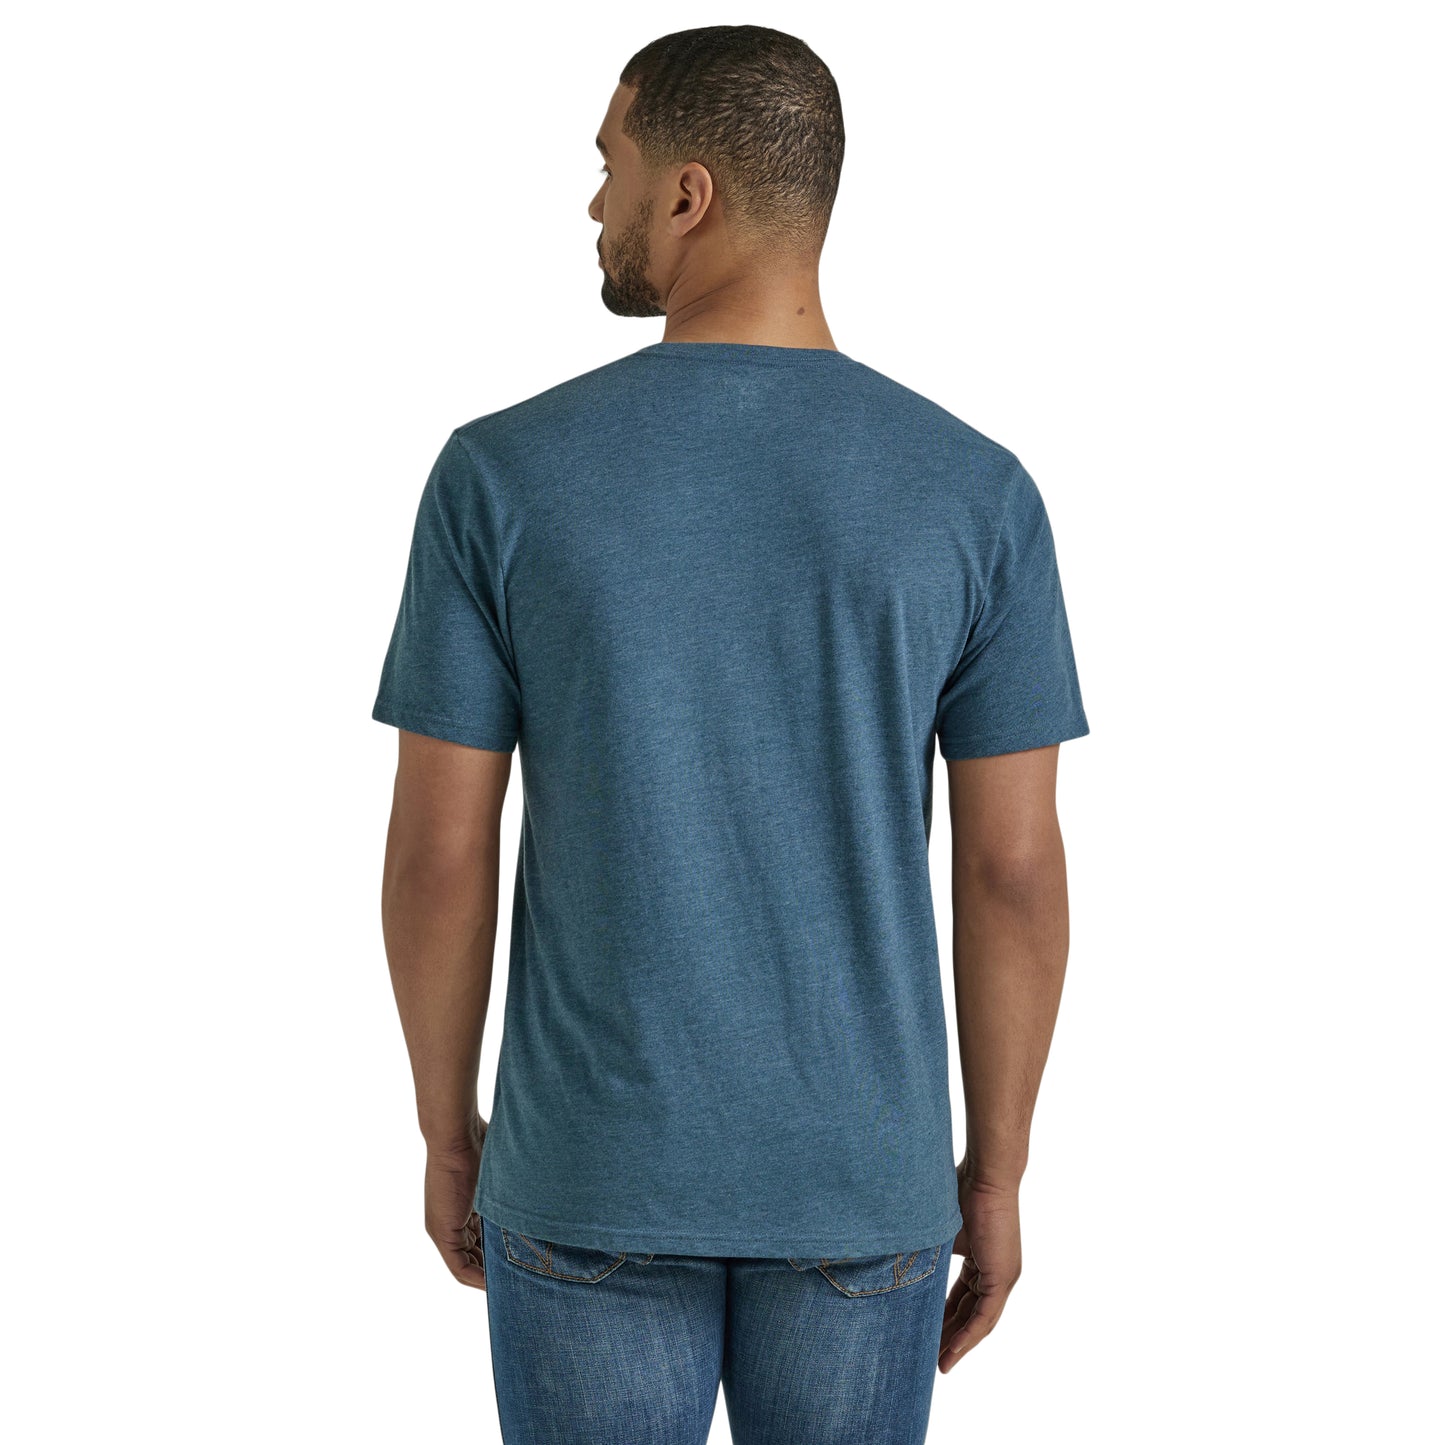 Wrangler Men's Western Graphic Midnight Navy T-Shirt 112346554